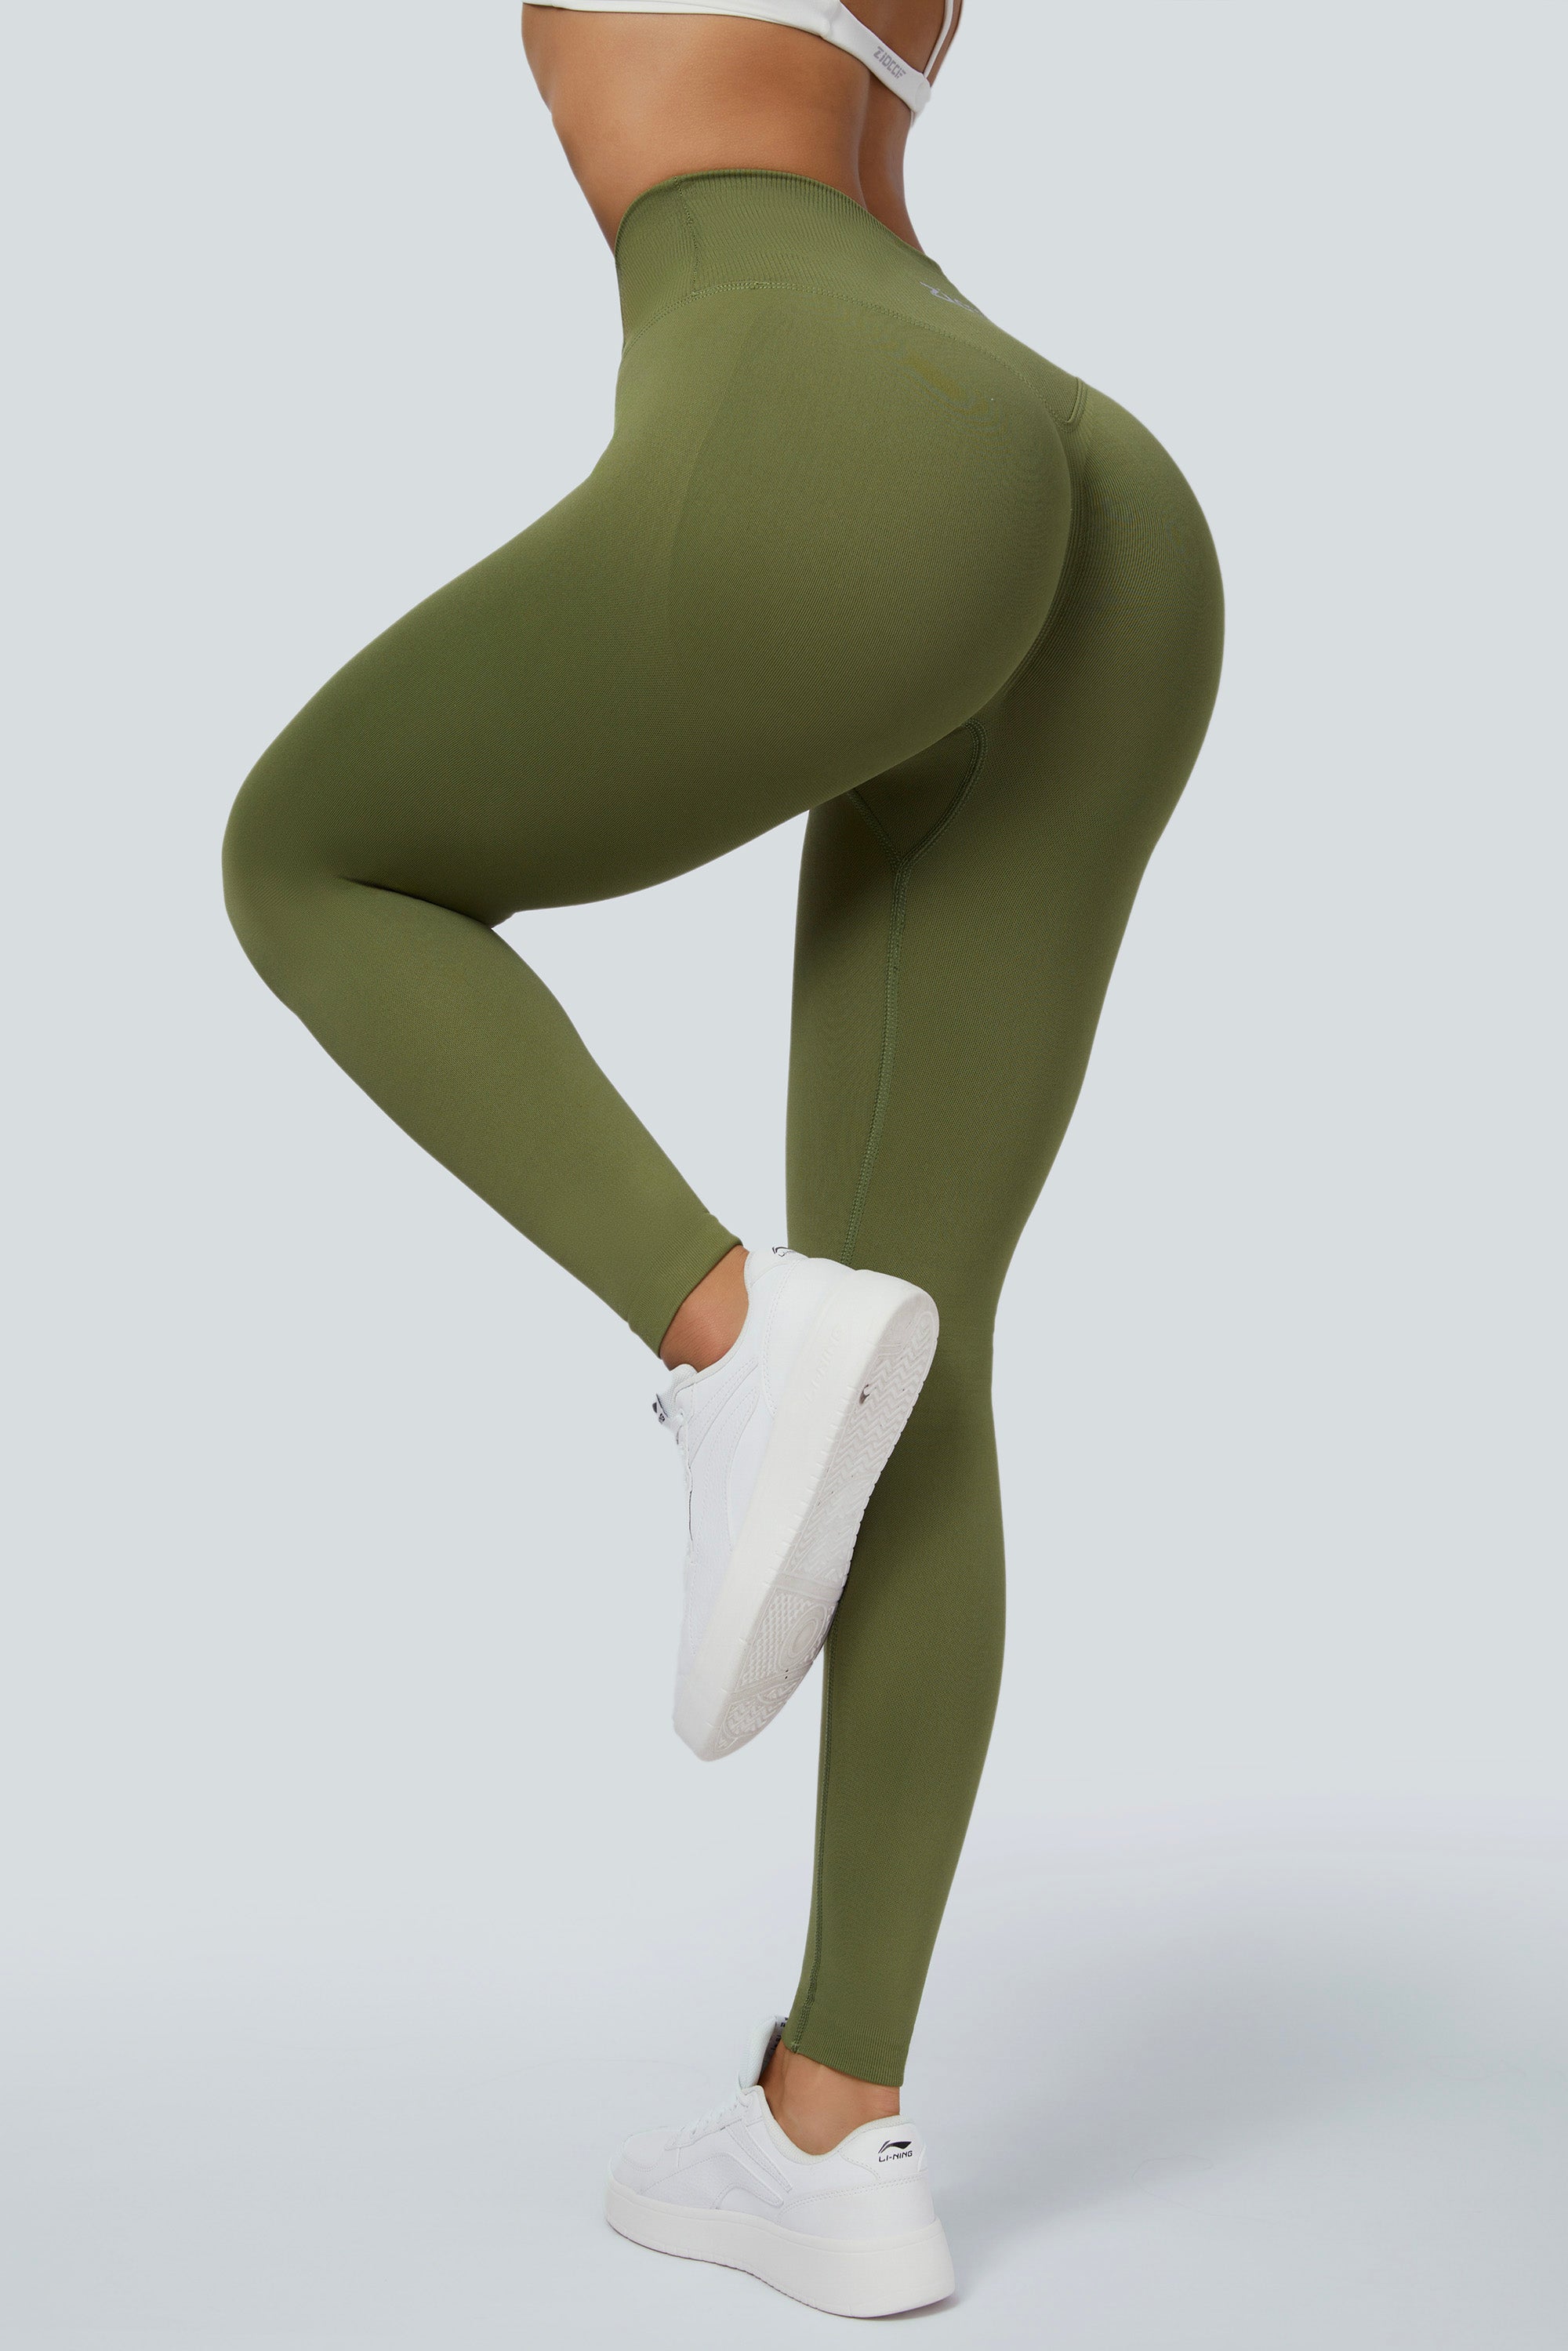 Haute Edition Women's Booty Lift Scrunch Active Yoga Leggings with Cel